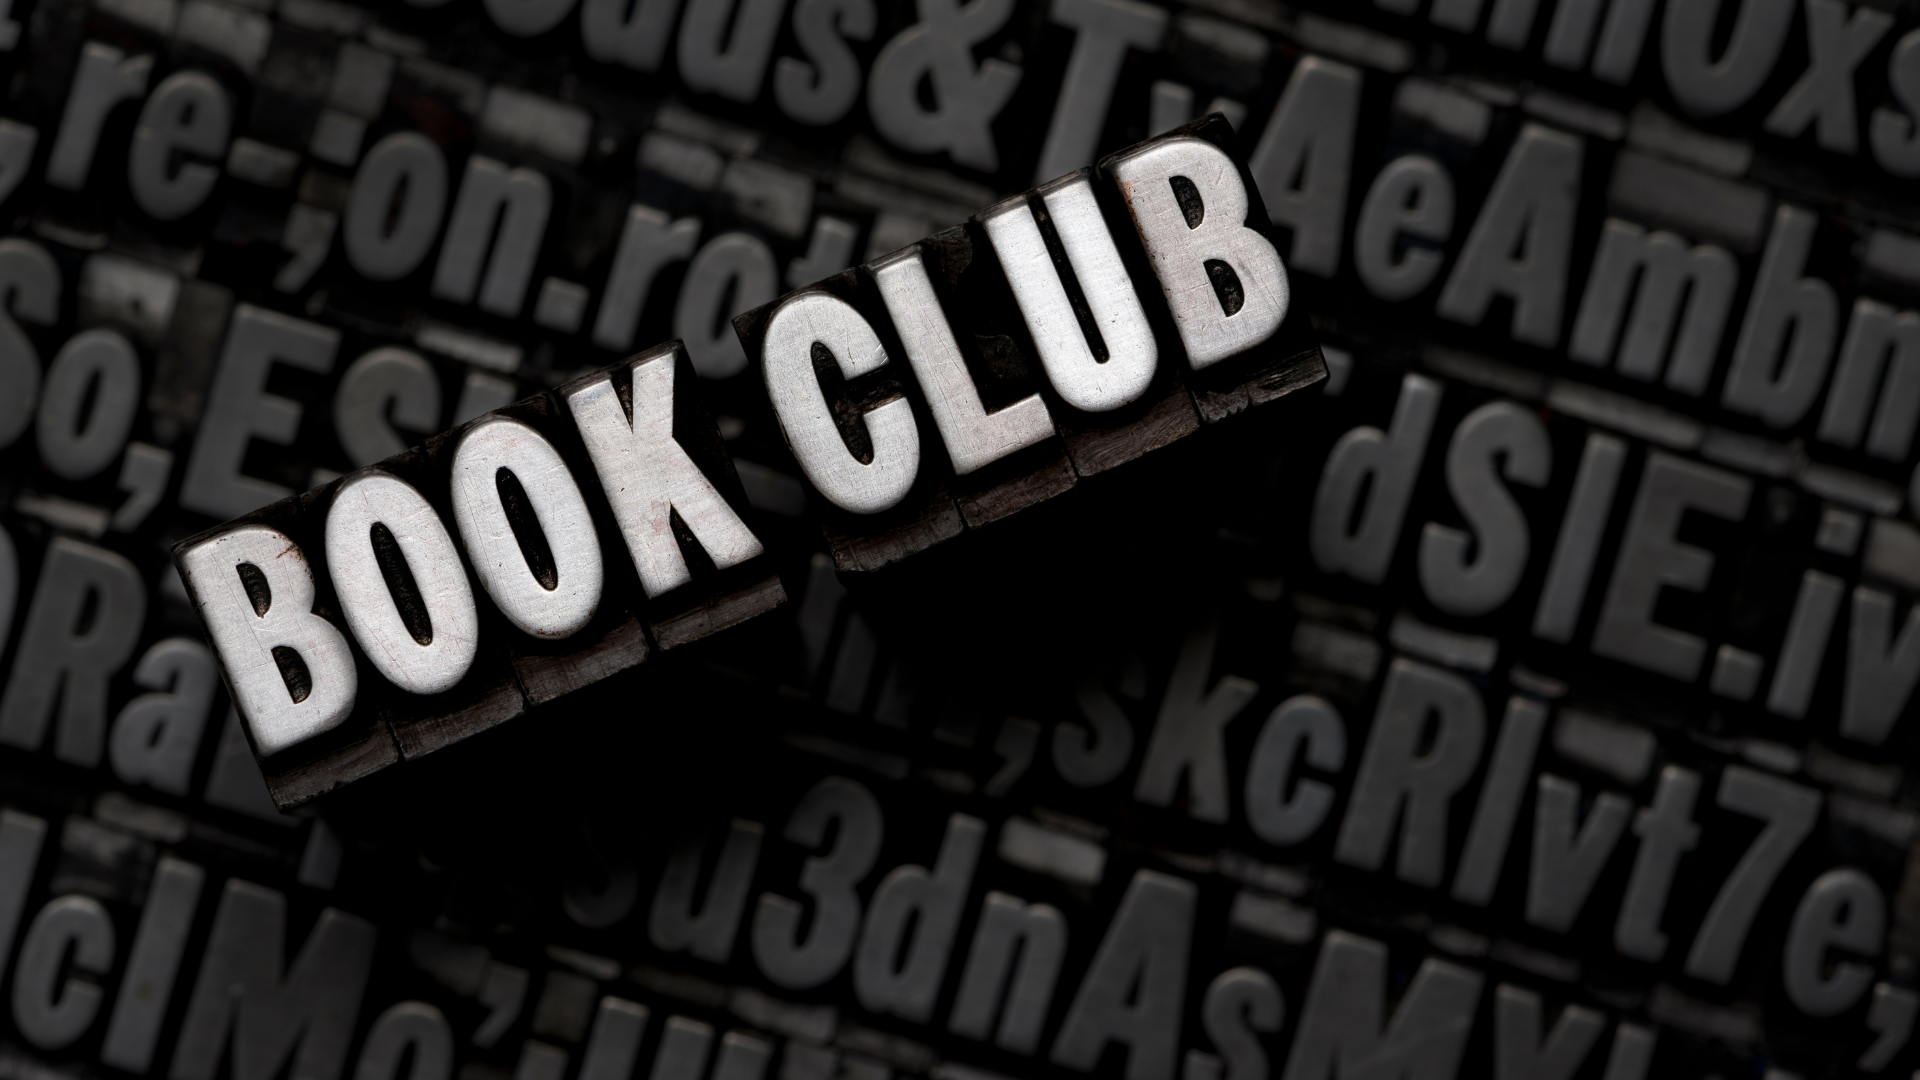 DEIA Book Club